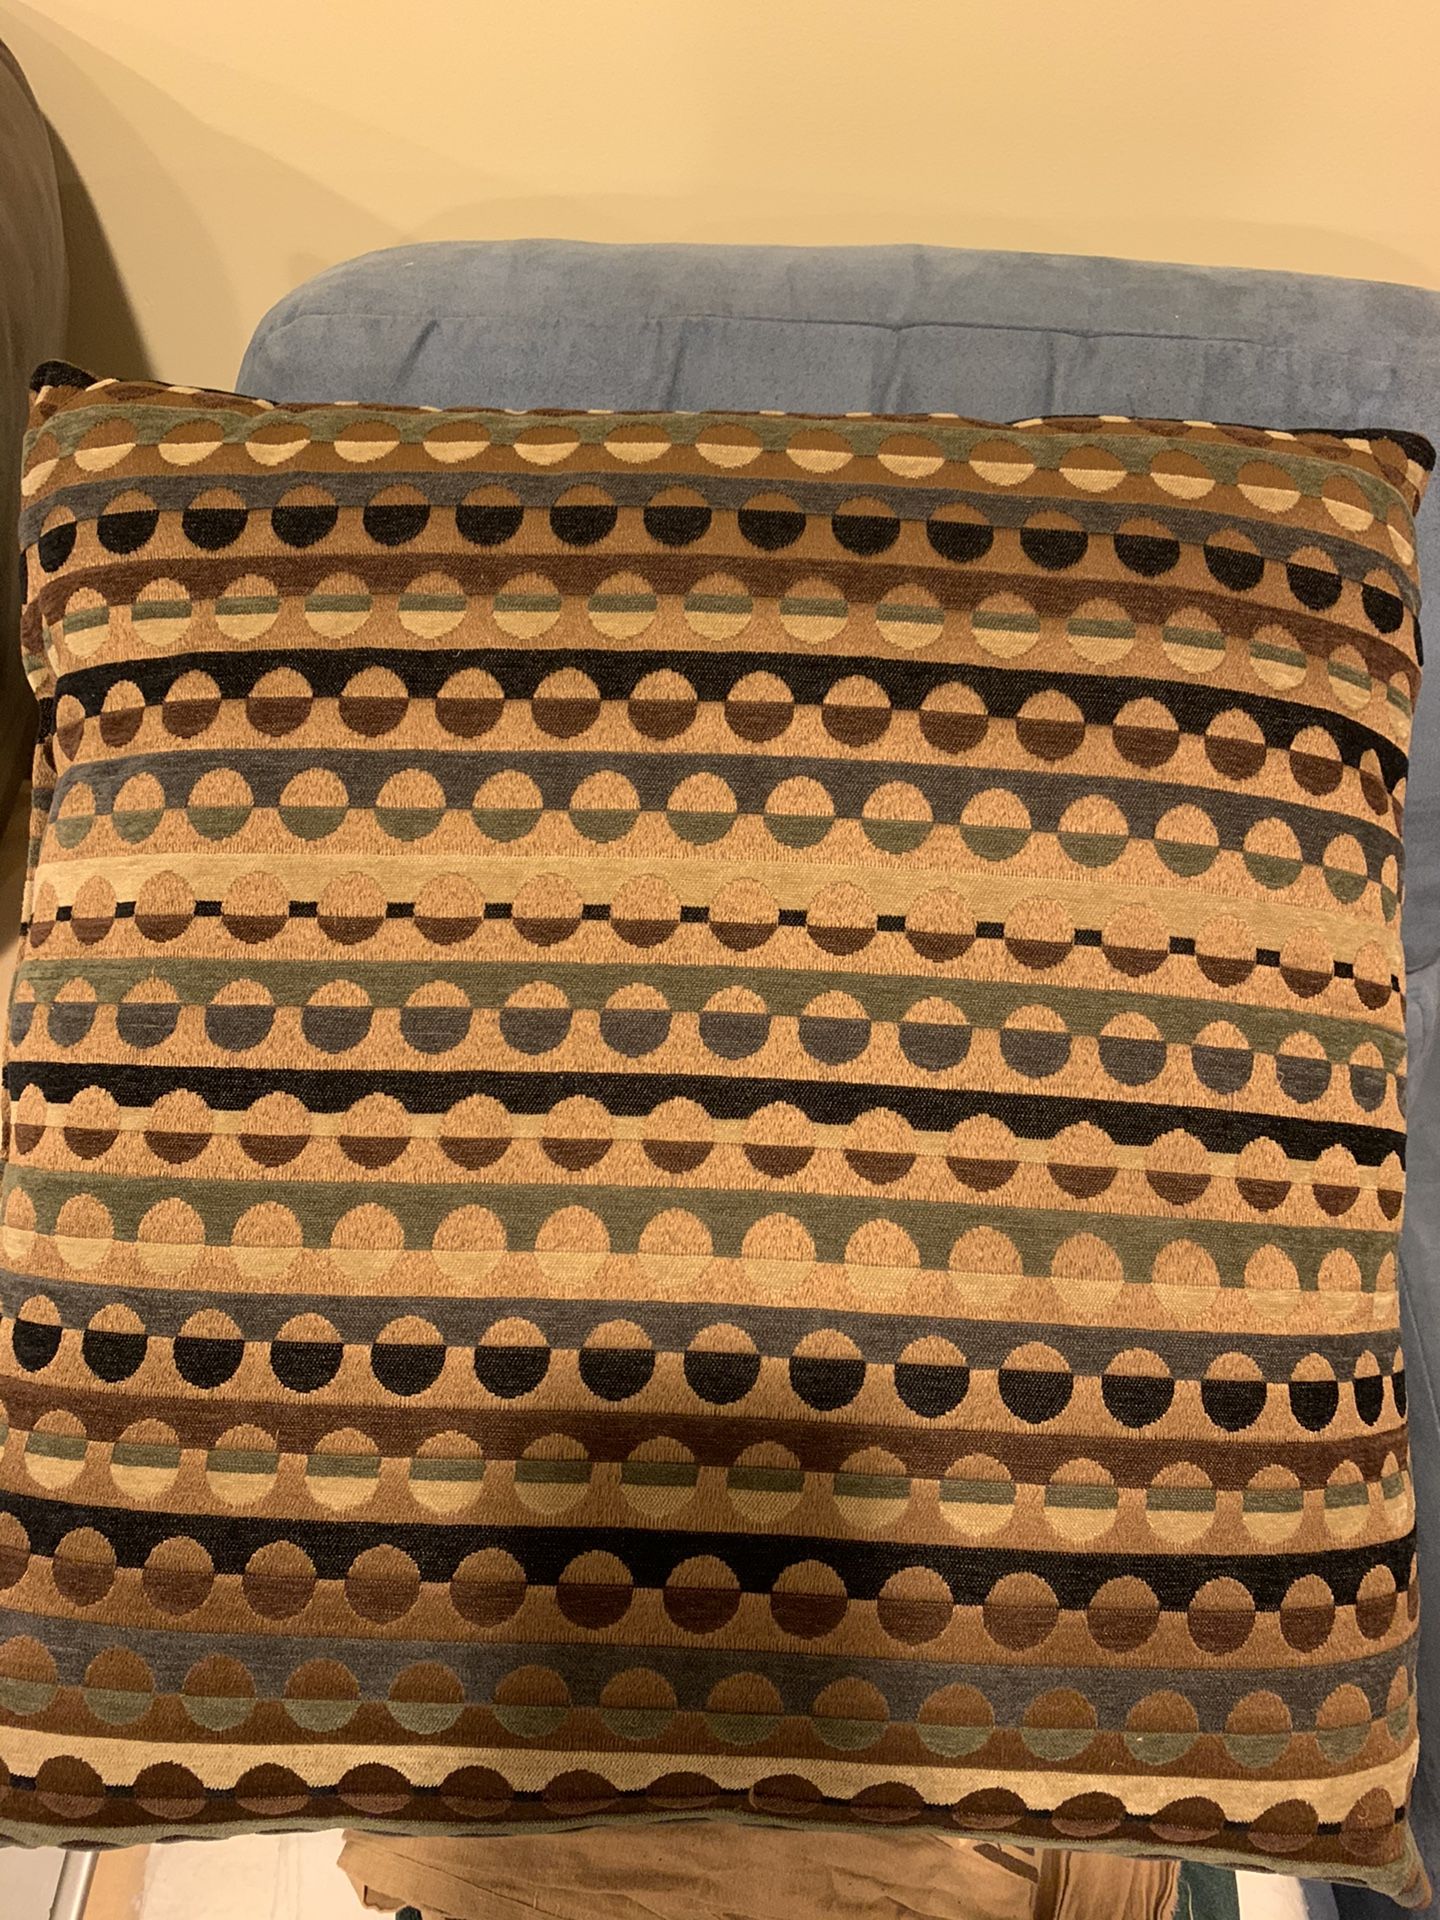 Beautiful pillows for decor. 16”x16”